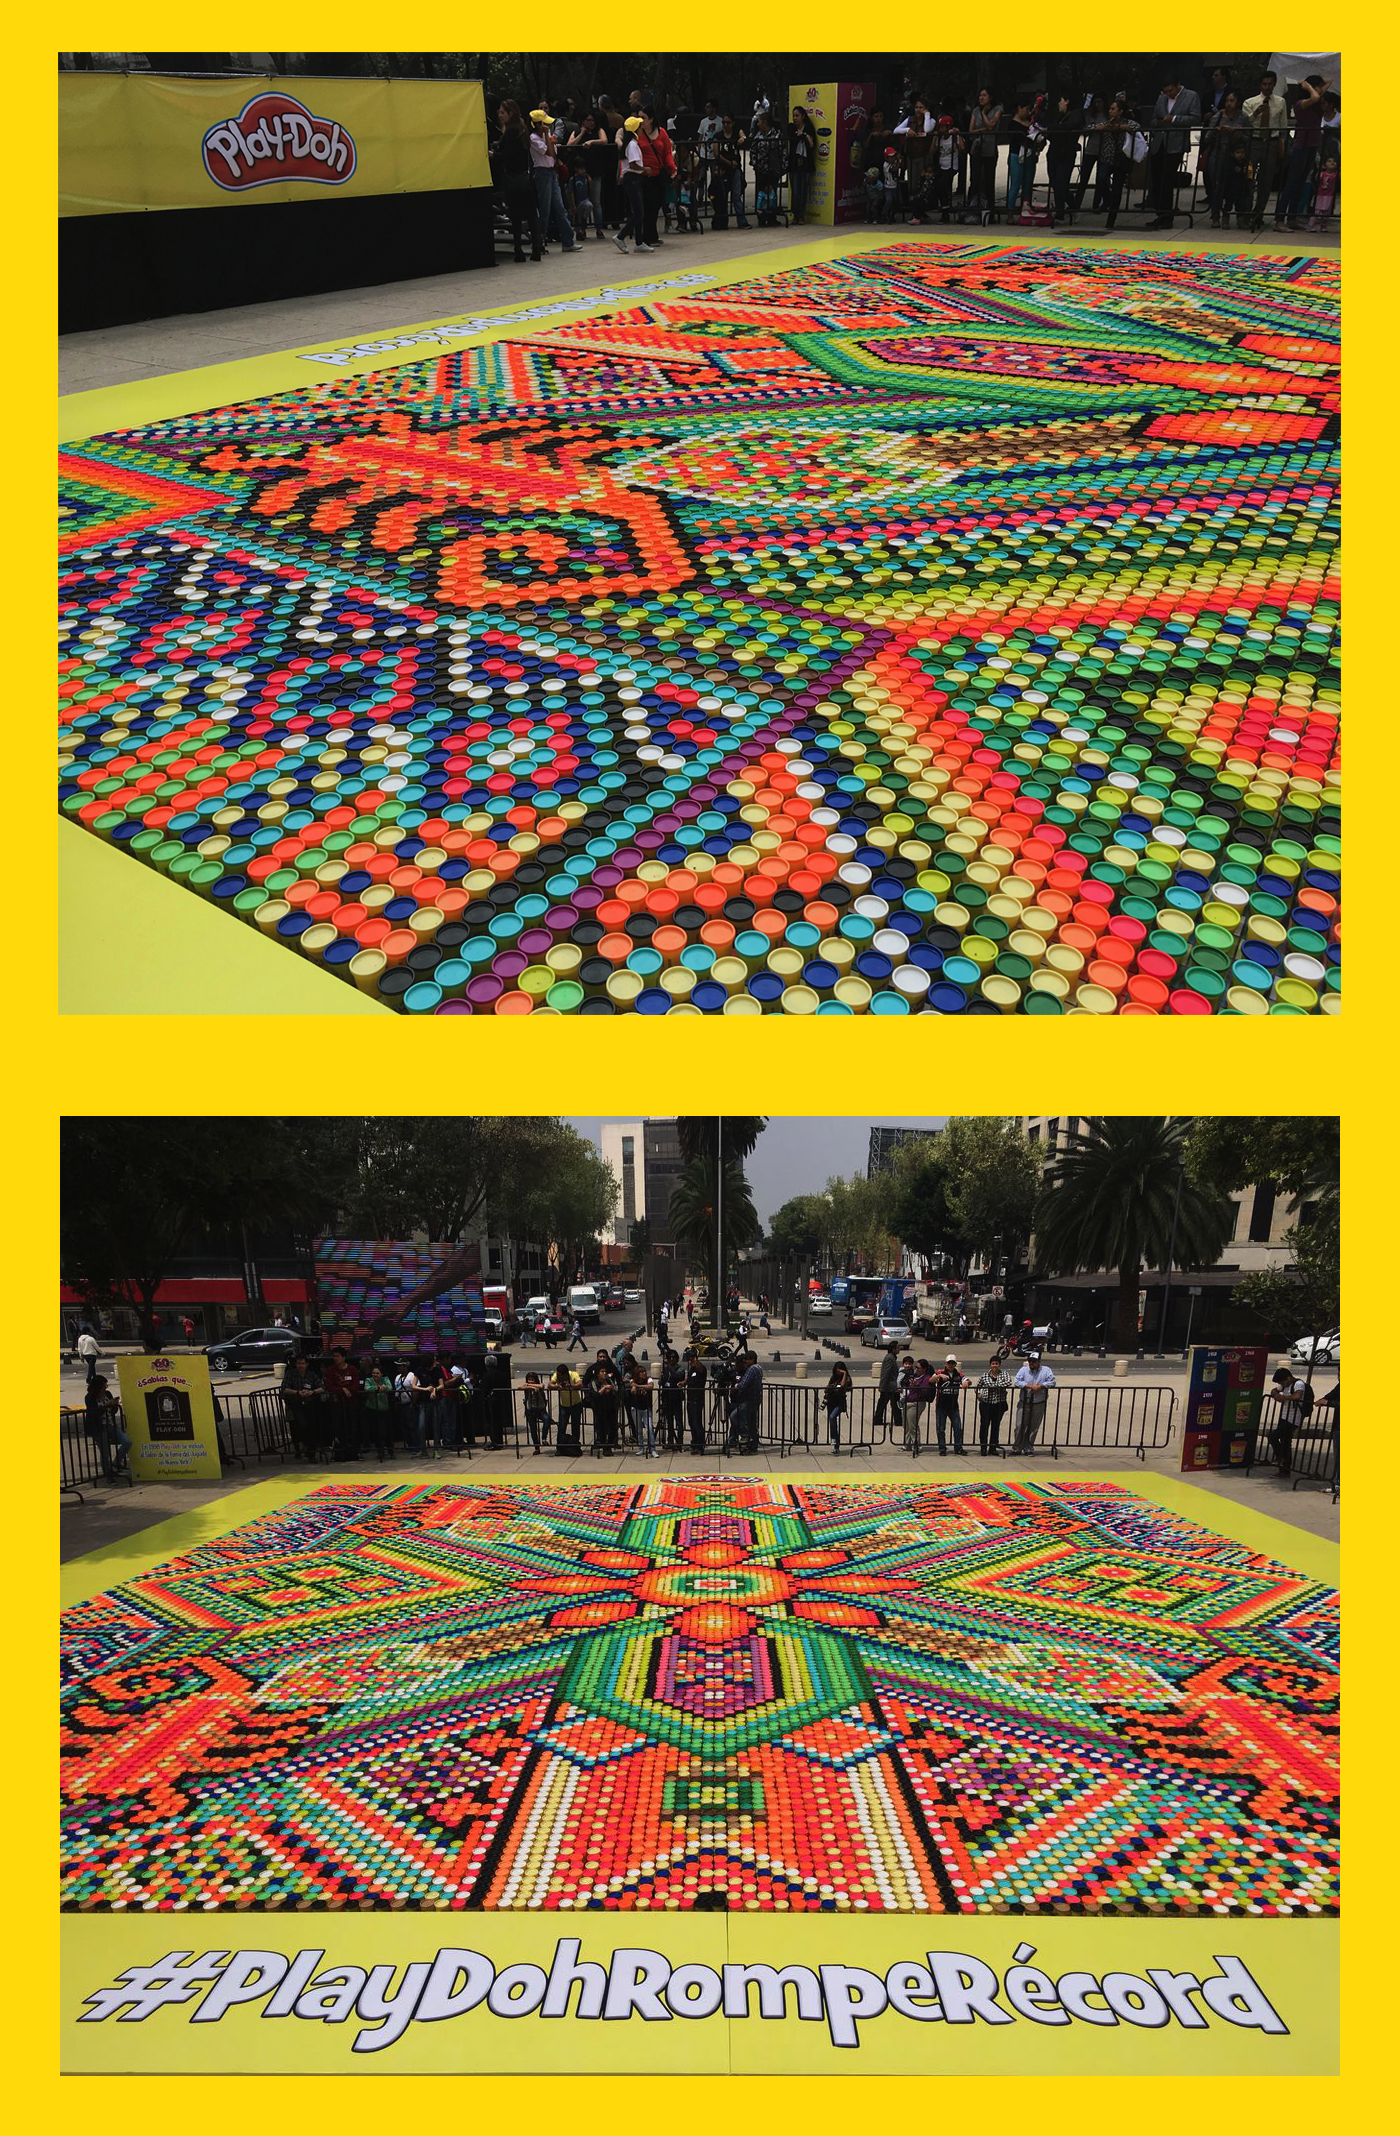 art design Mural mosaic pixelart recordguinness playdoh colors designer